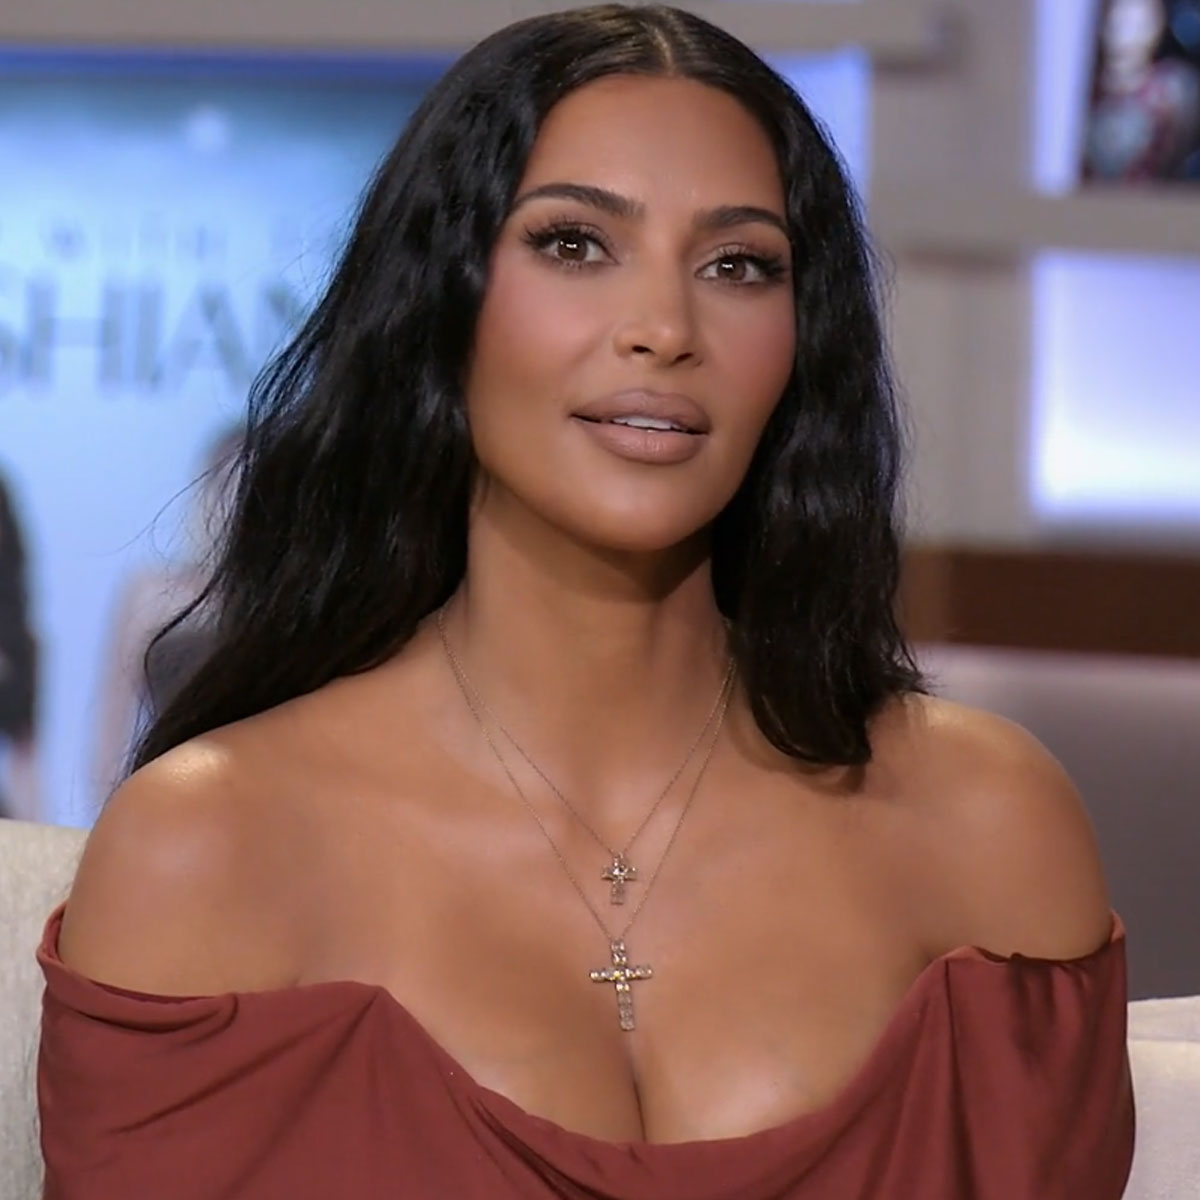 Kim Kardashian Porn With Captions - Kim Kardashian Admits Infamous Sex Tape Helped Success of KUWTK - E! Online